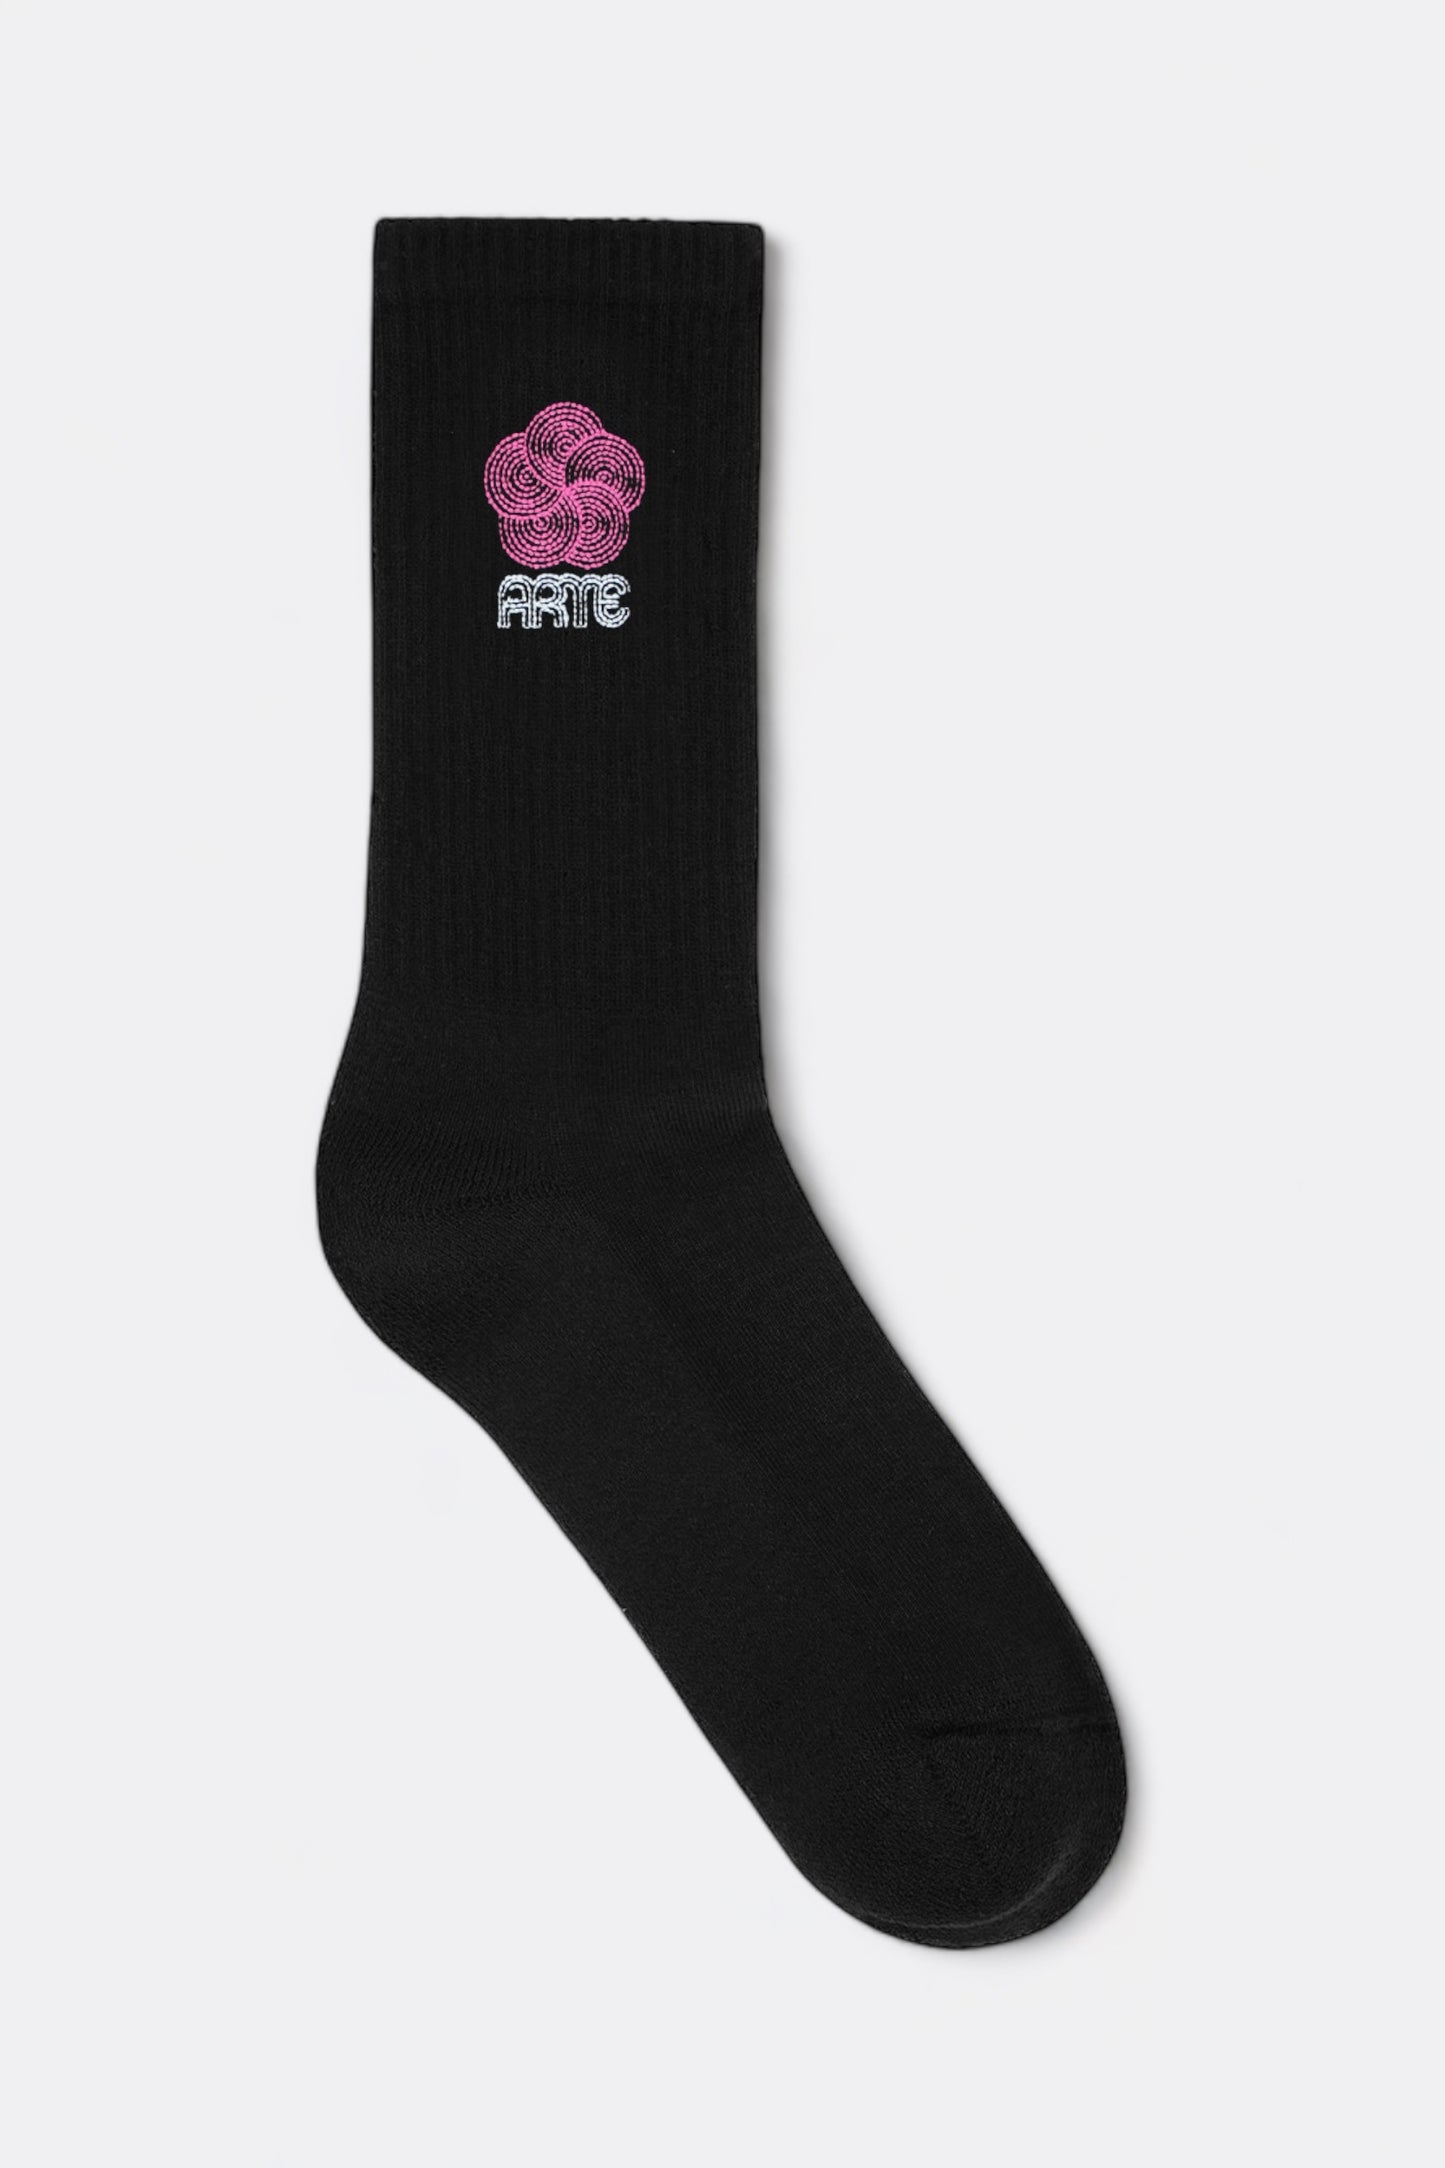 Arte - Arte Circle Logo Socks (Black)